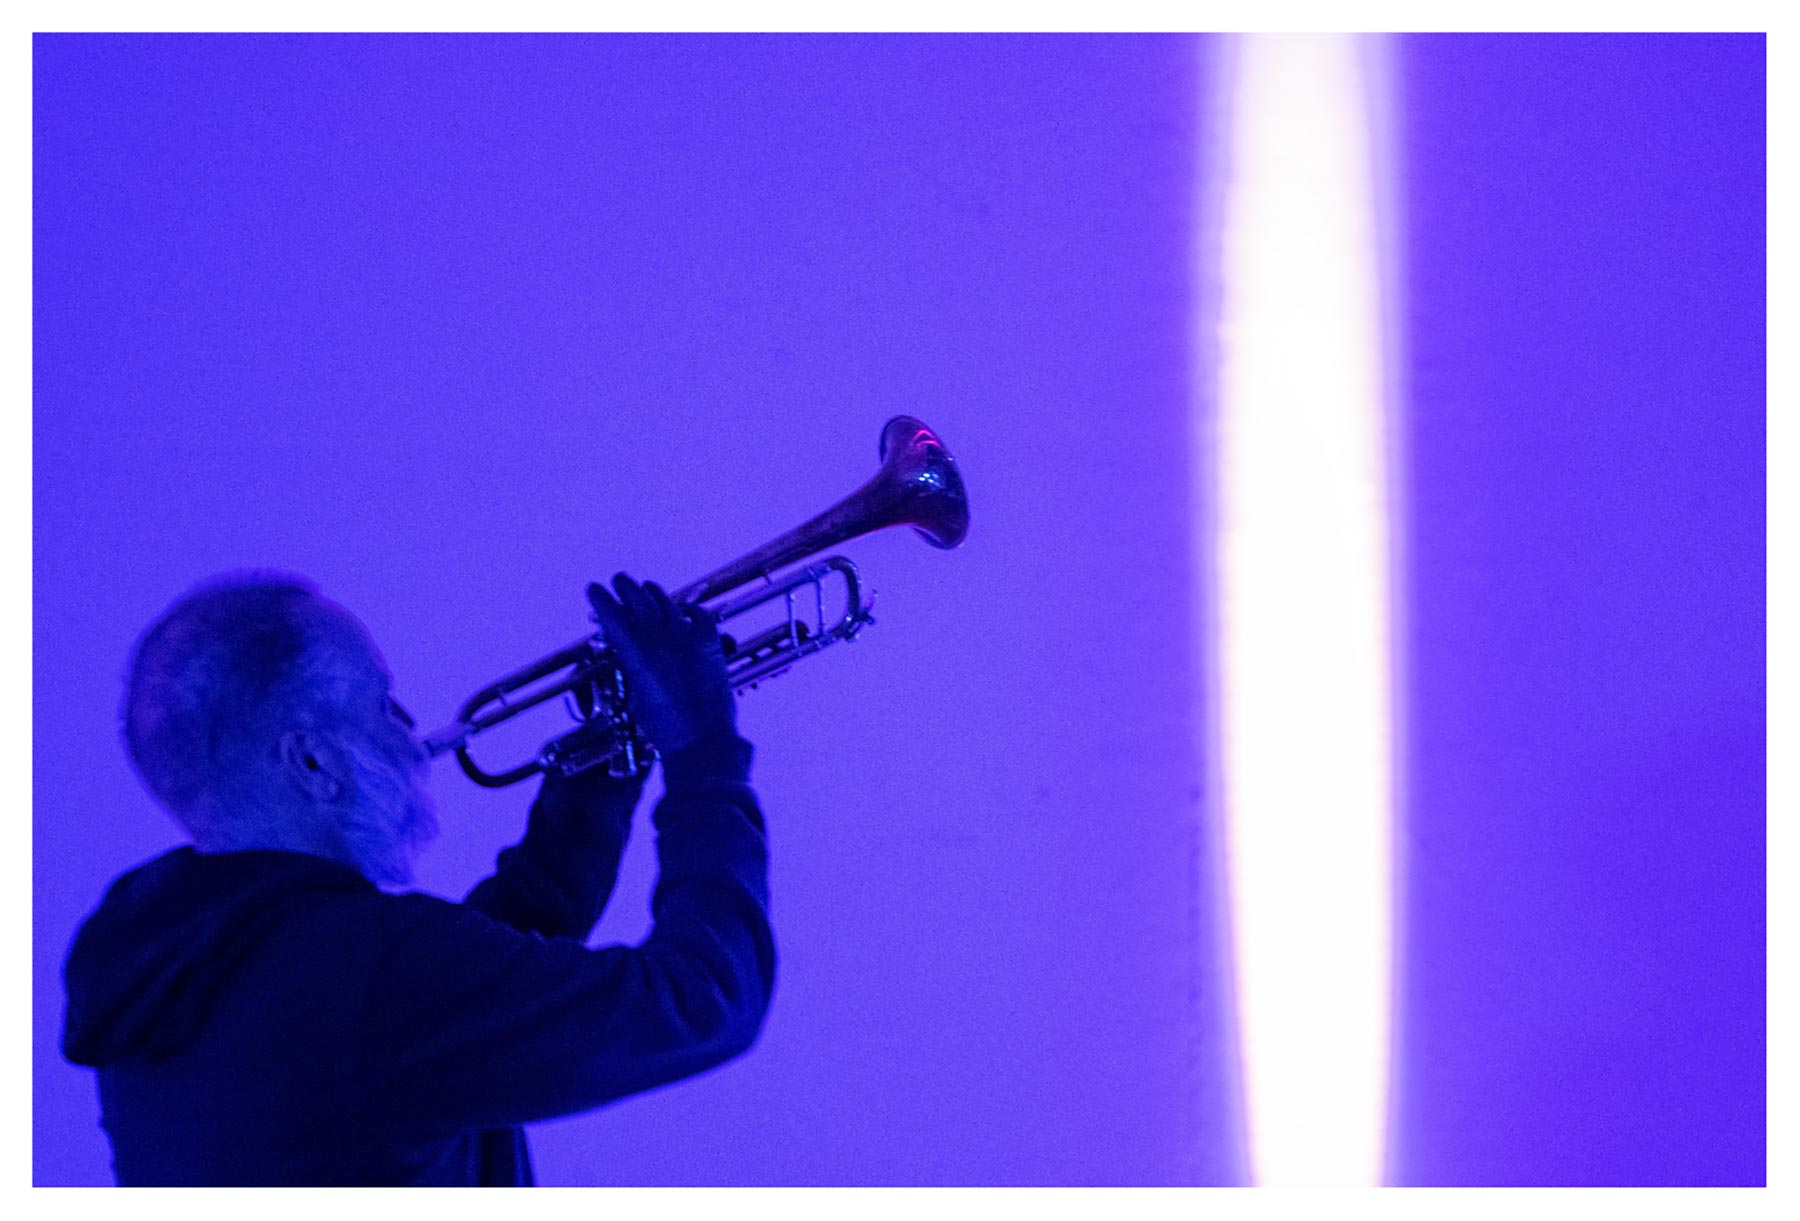 Jeff Kaiser at the Bernaola Music Festival, Artium, Vitoria-Gasteiz, Spain